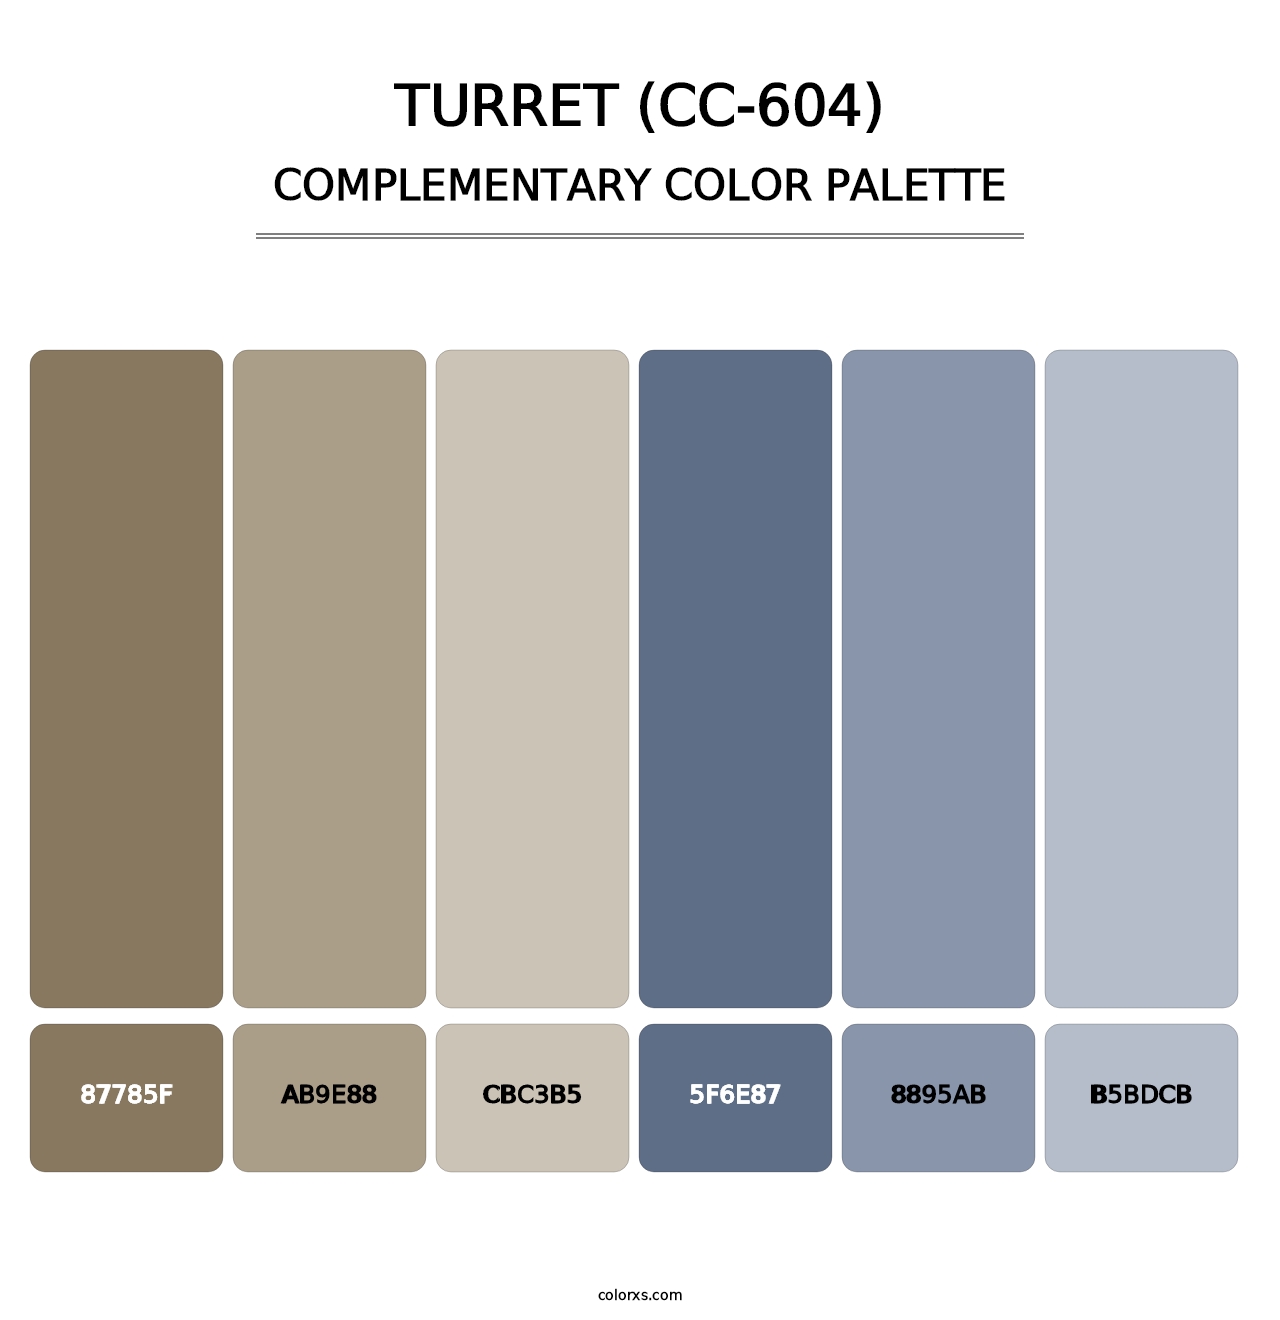 Turret (CC-604) - Complementary Color Palette